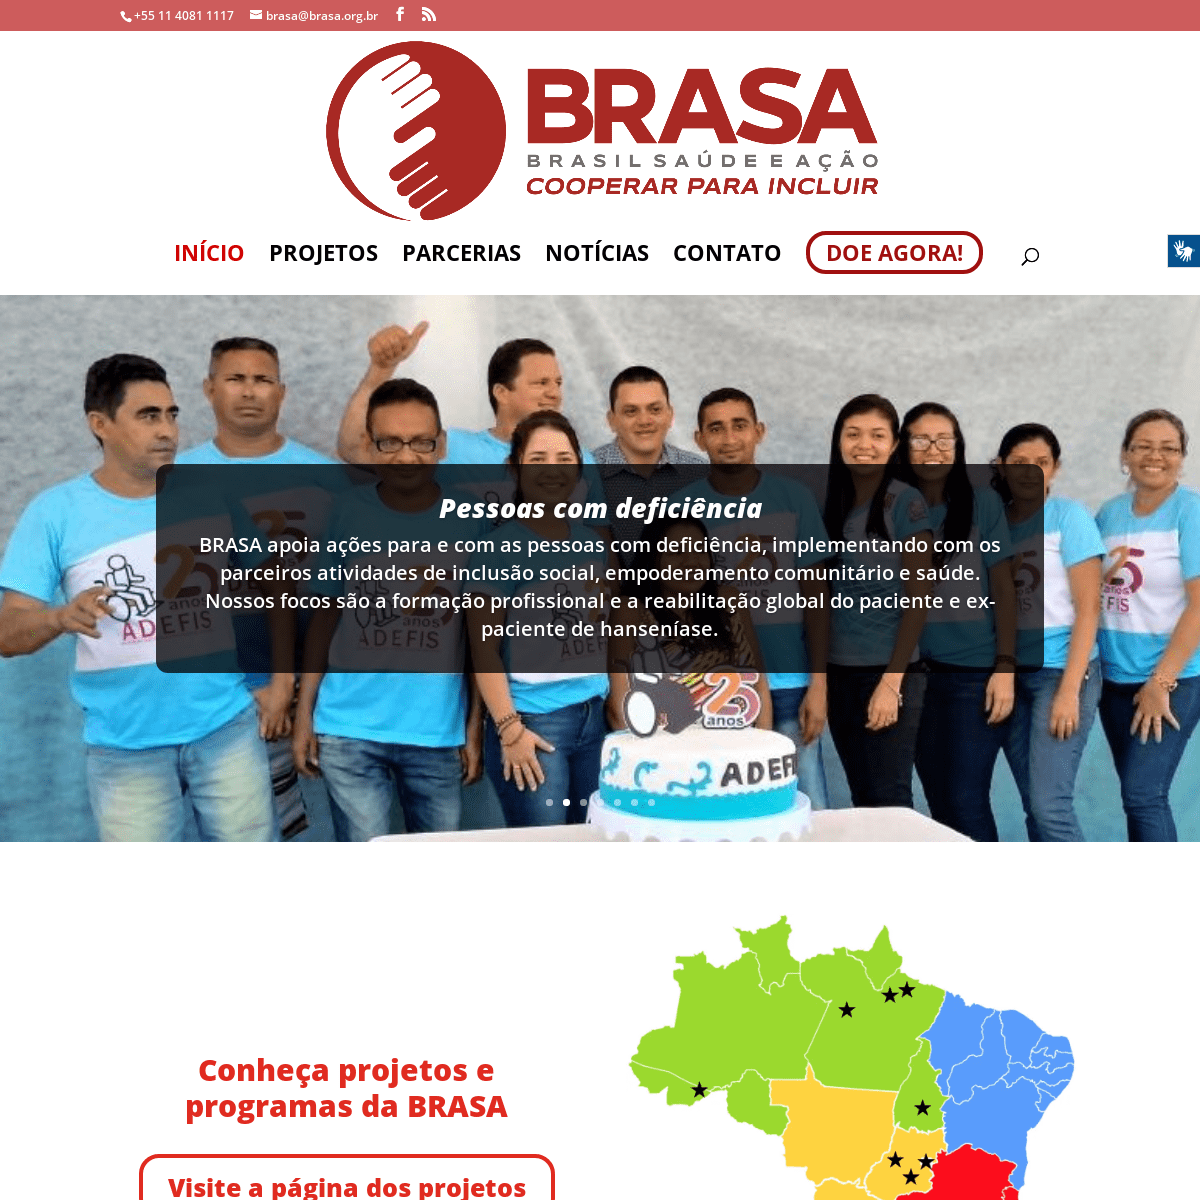 A complete backup of brasa.org.br